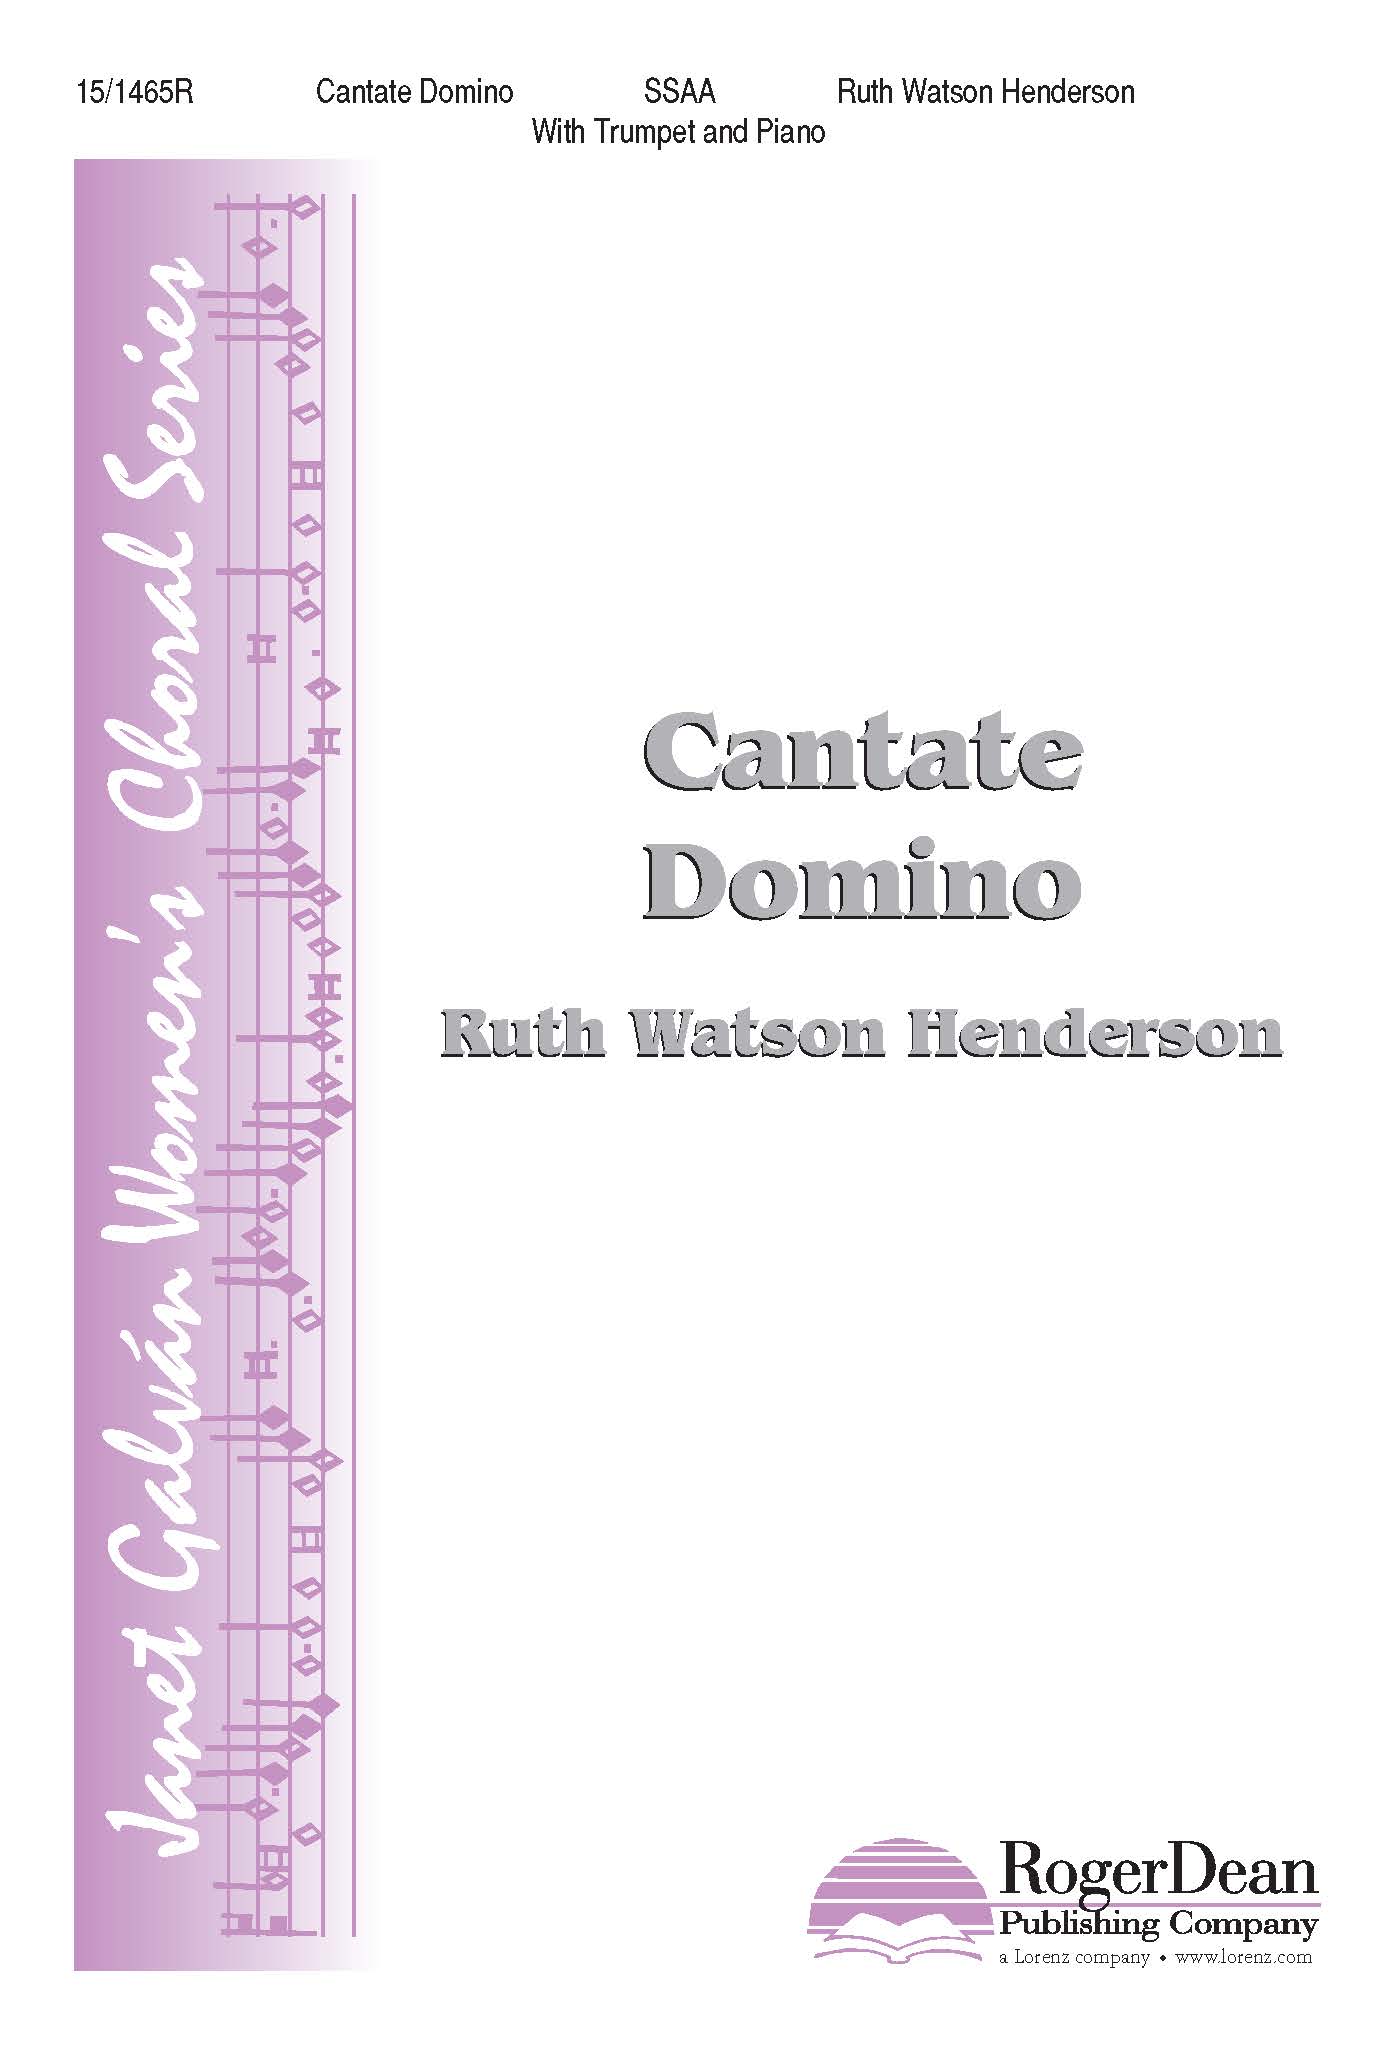 Cantate Domino : SSAA : Ruth Watson Henderson : Ruth Watson Henderson : Sheet Music : 15-1465R : 000308043693